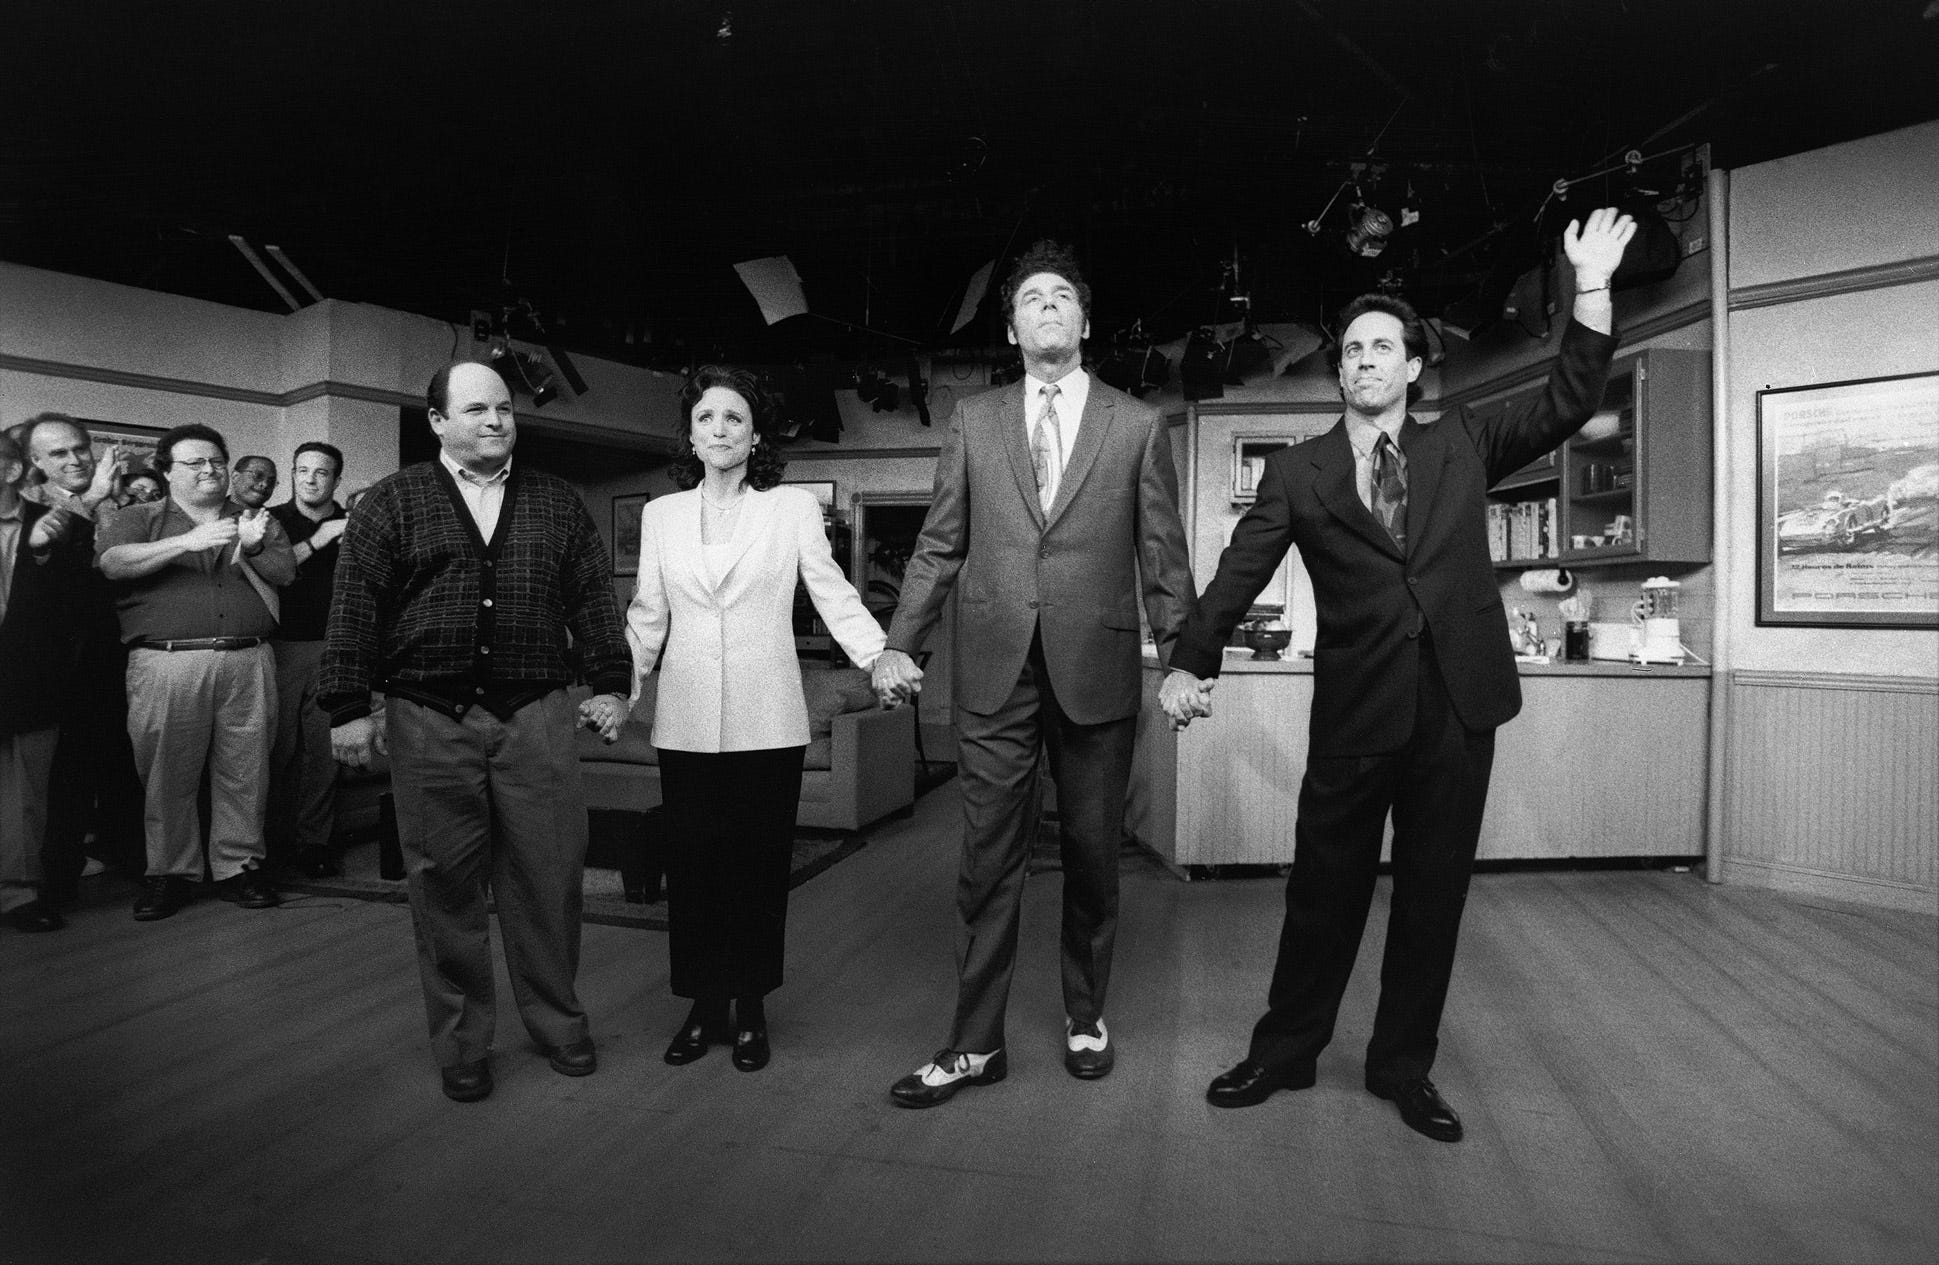 Fantastic Seinfeld. David Puddy.  Seinfeld, Seinfeld characters